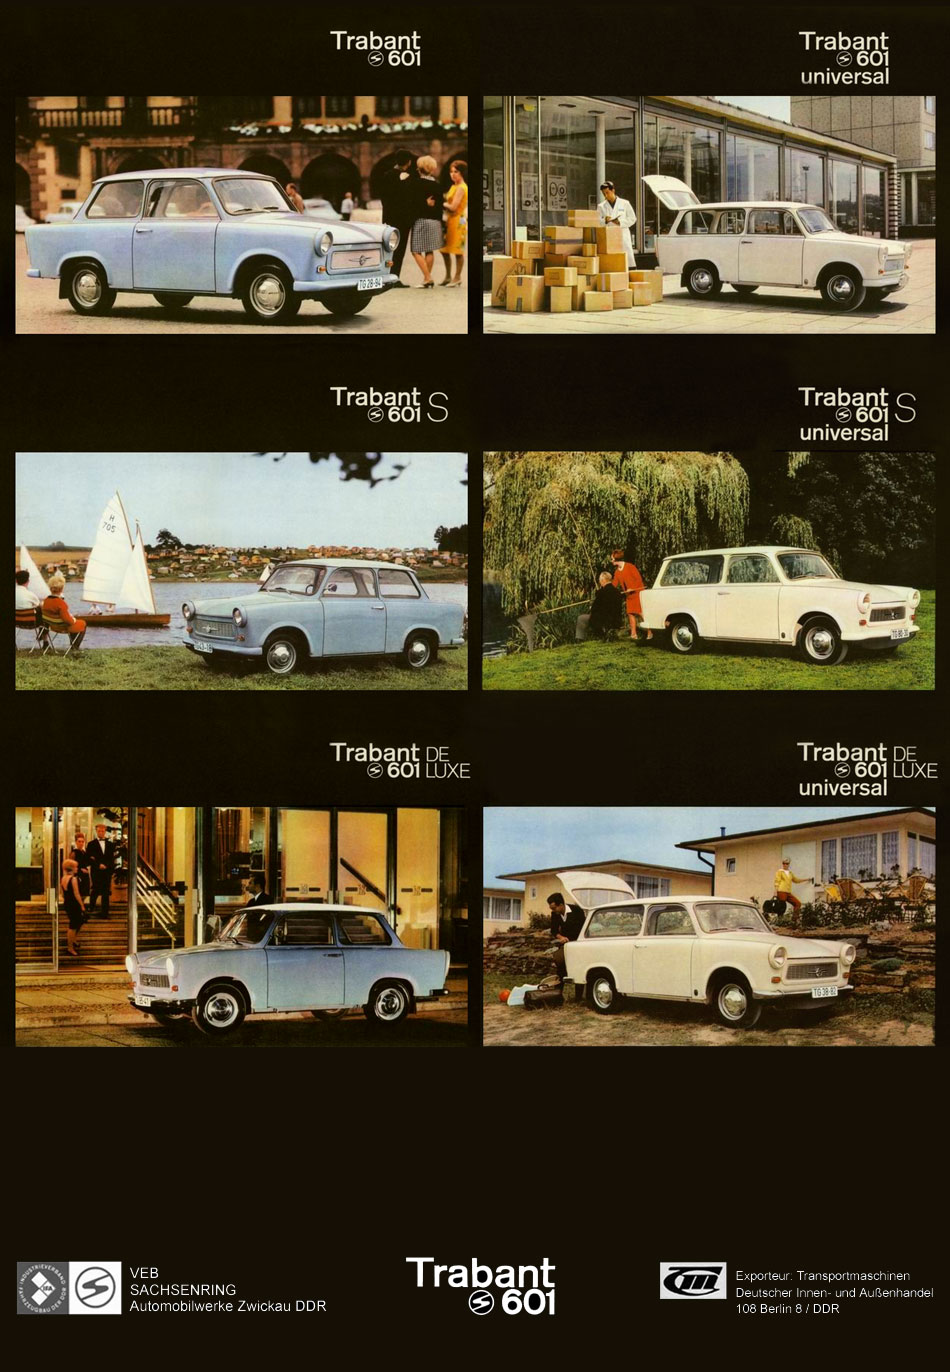 1966 - Trabant 601